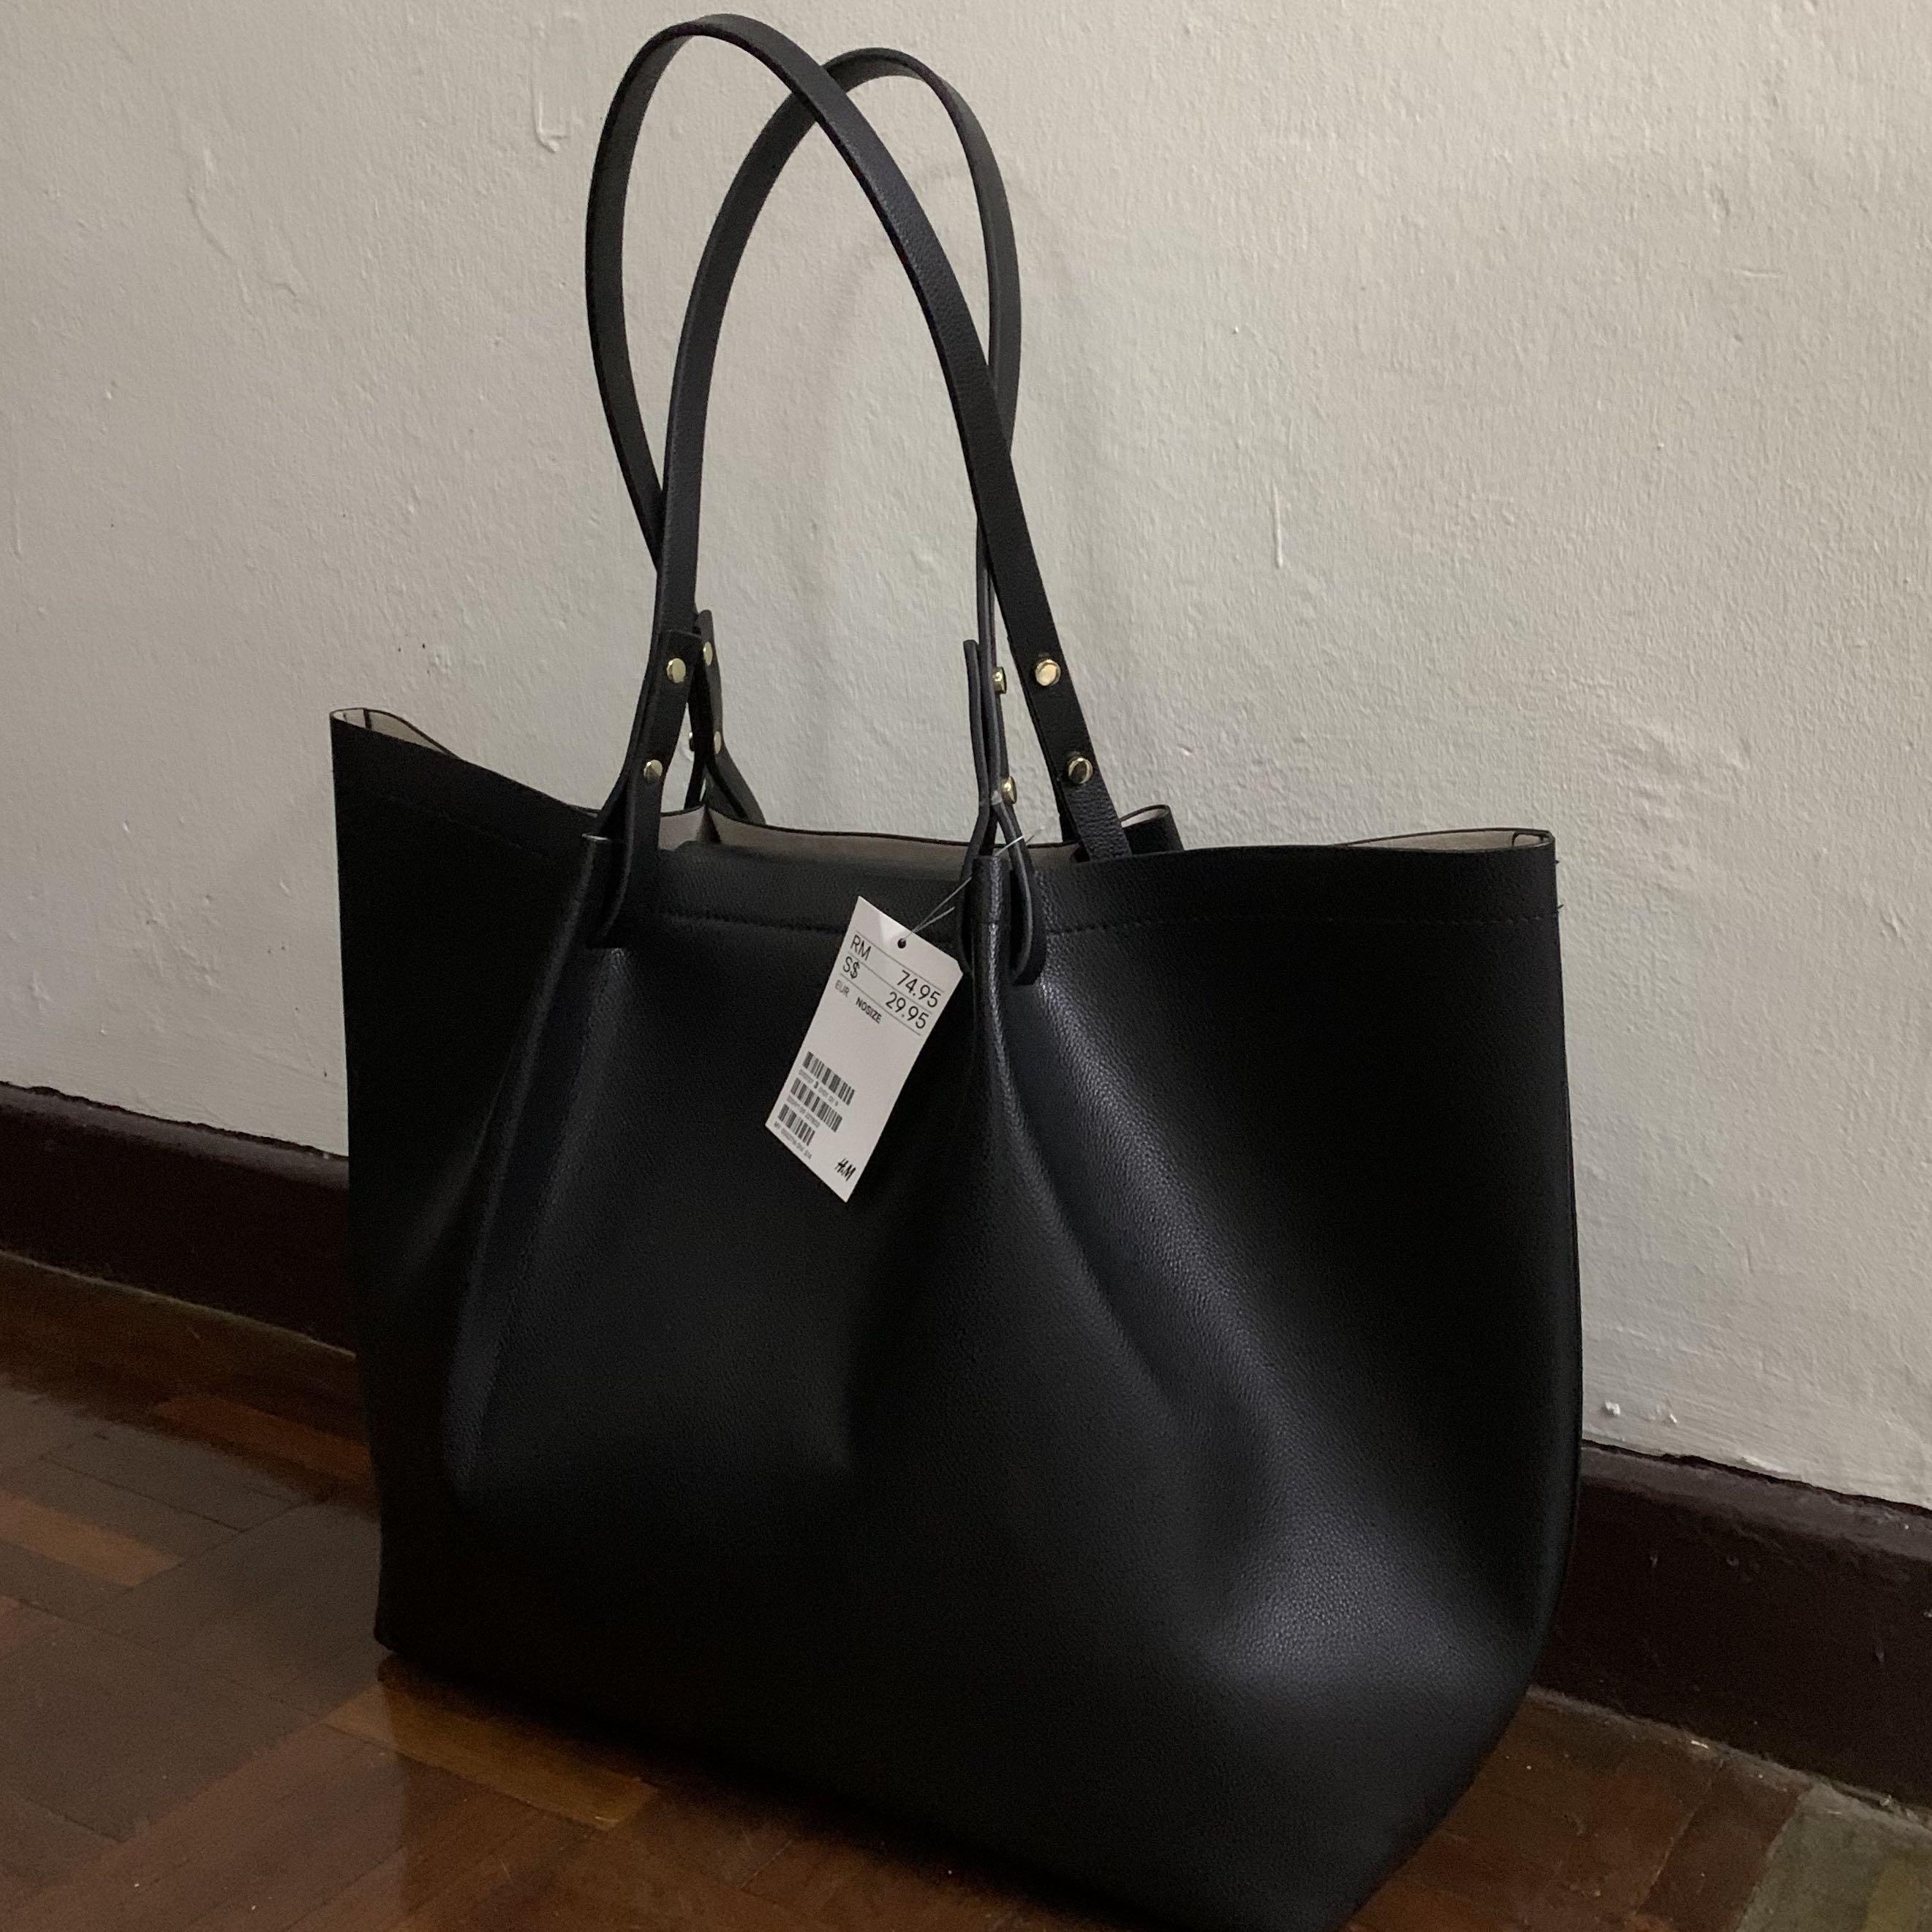 H&M Black Colour Big Tote Bag Review